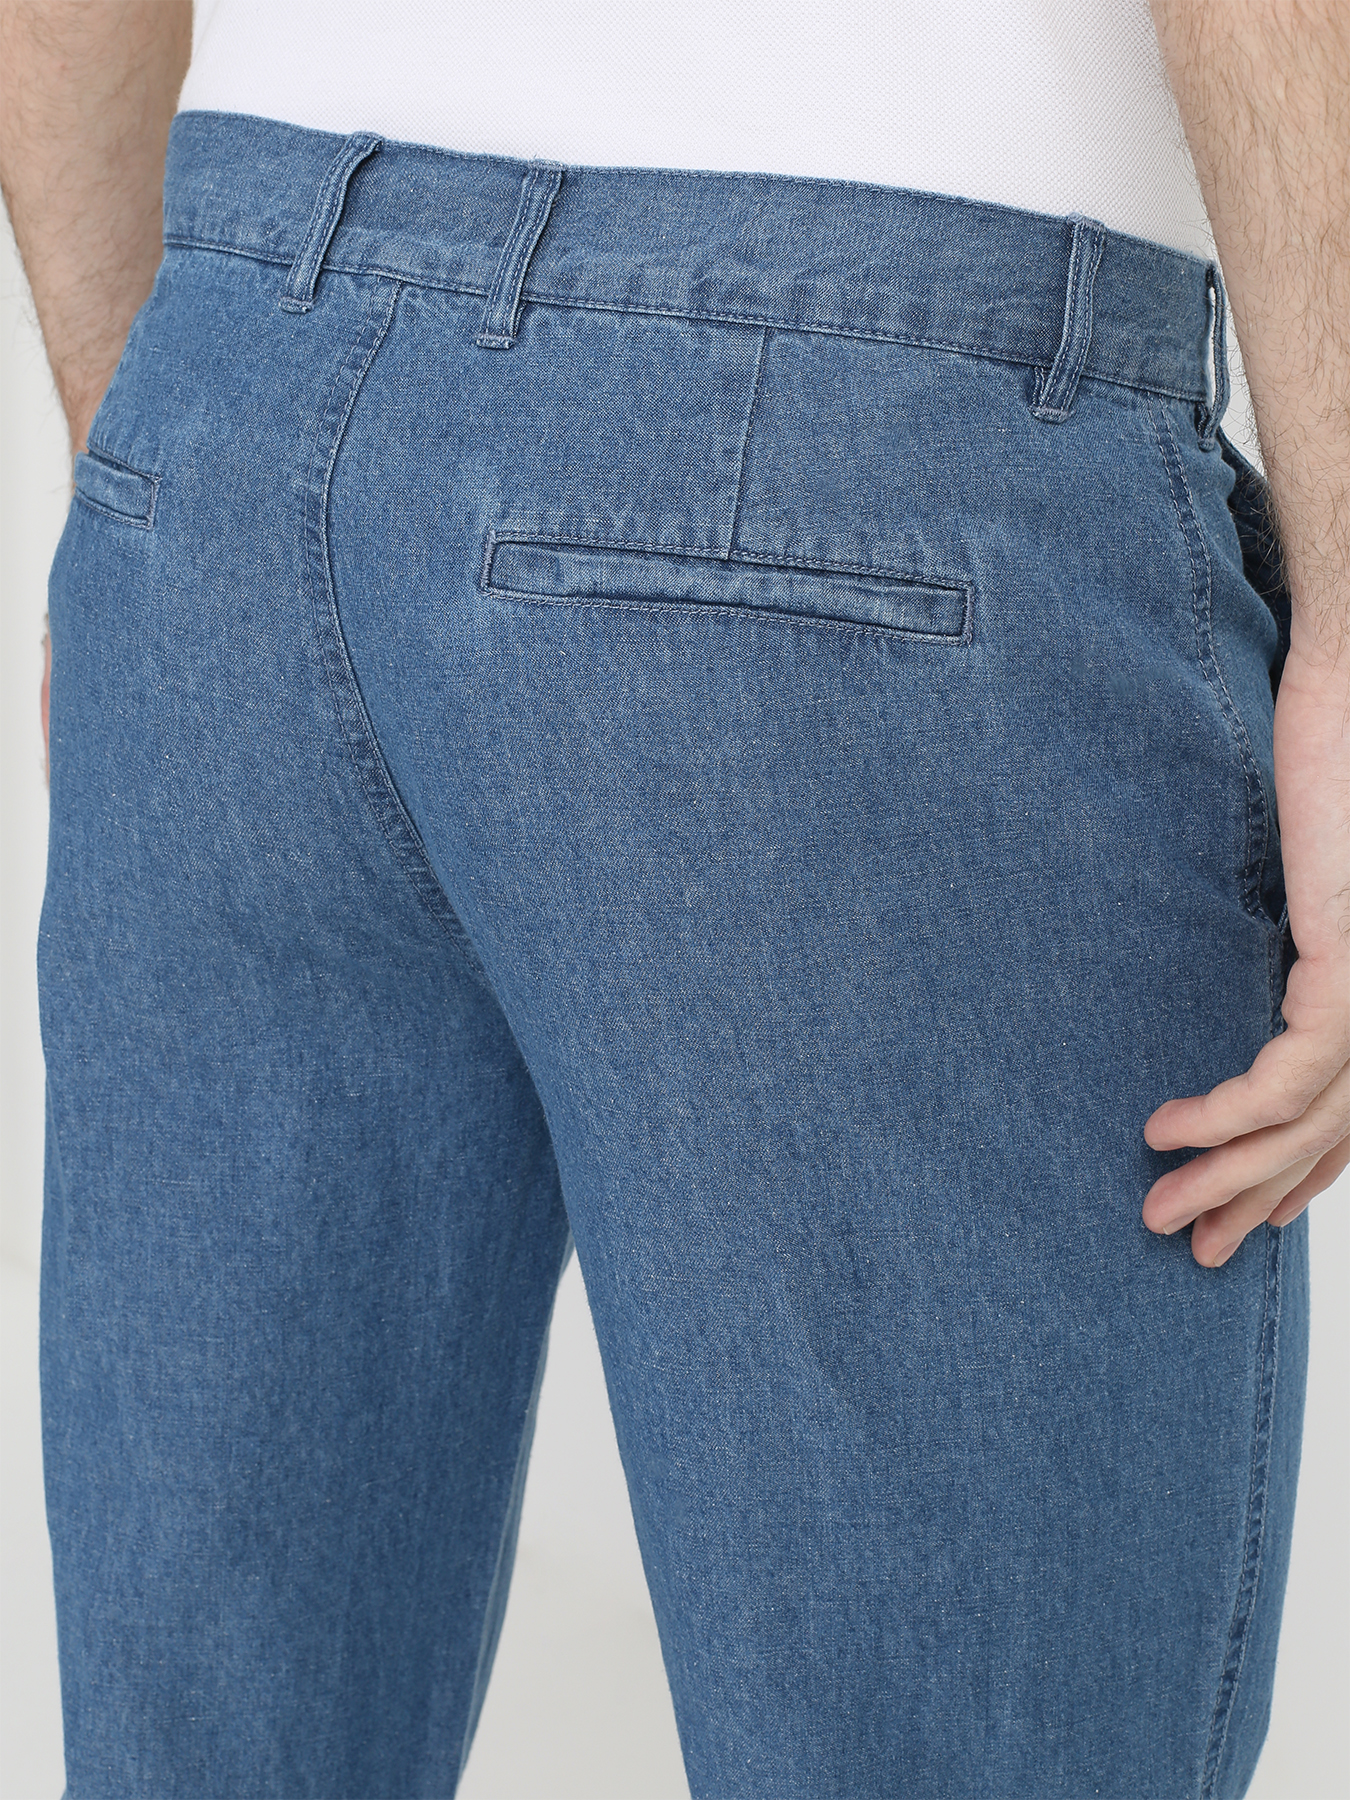 Alessandro Manzoni Jeans Прямые джинсы 330858-025 Фото 4